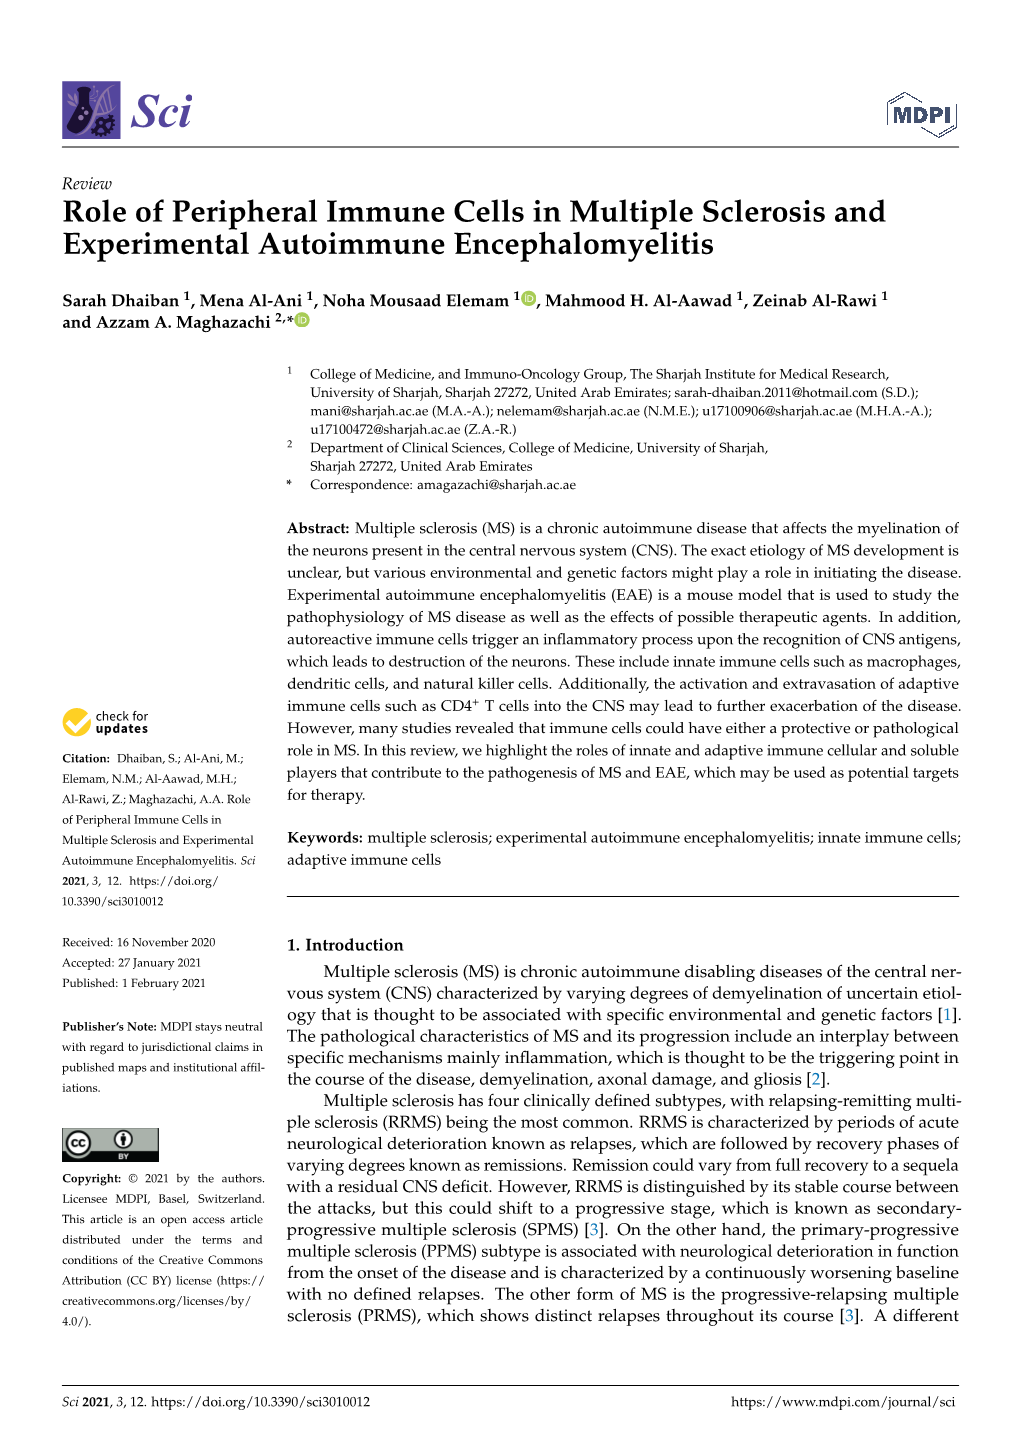 Role of Peripheral Immune Cells in Multiple Sclerosis and Experimental Autoimmune Encephalomyelitis